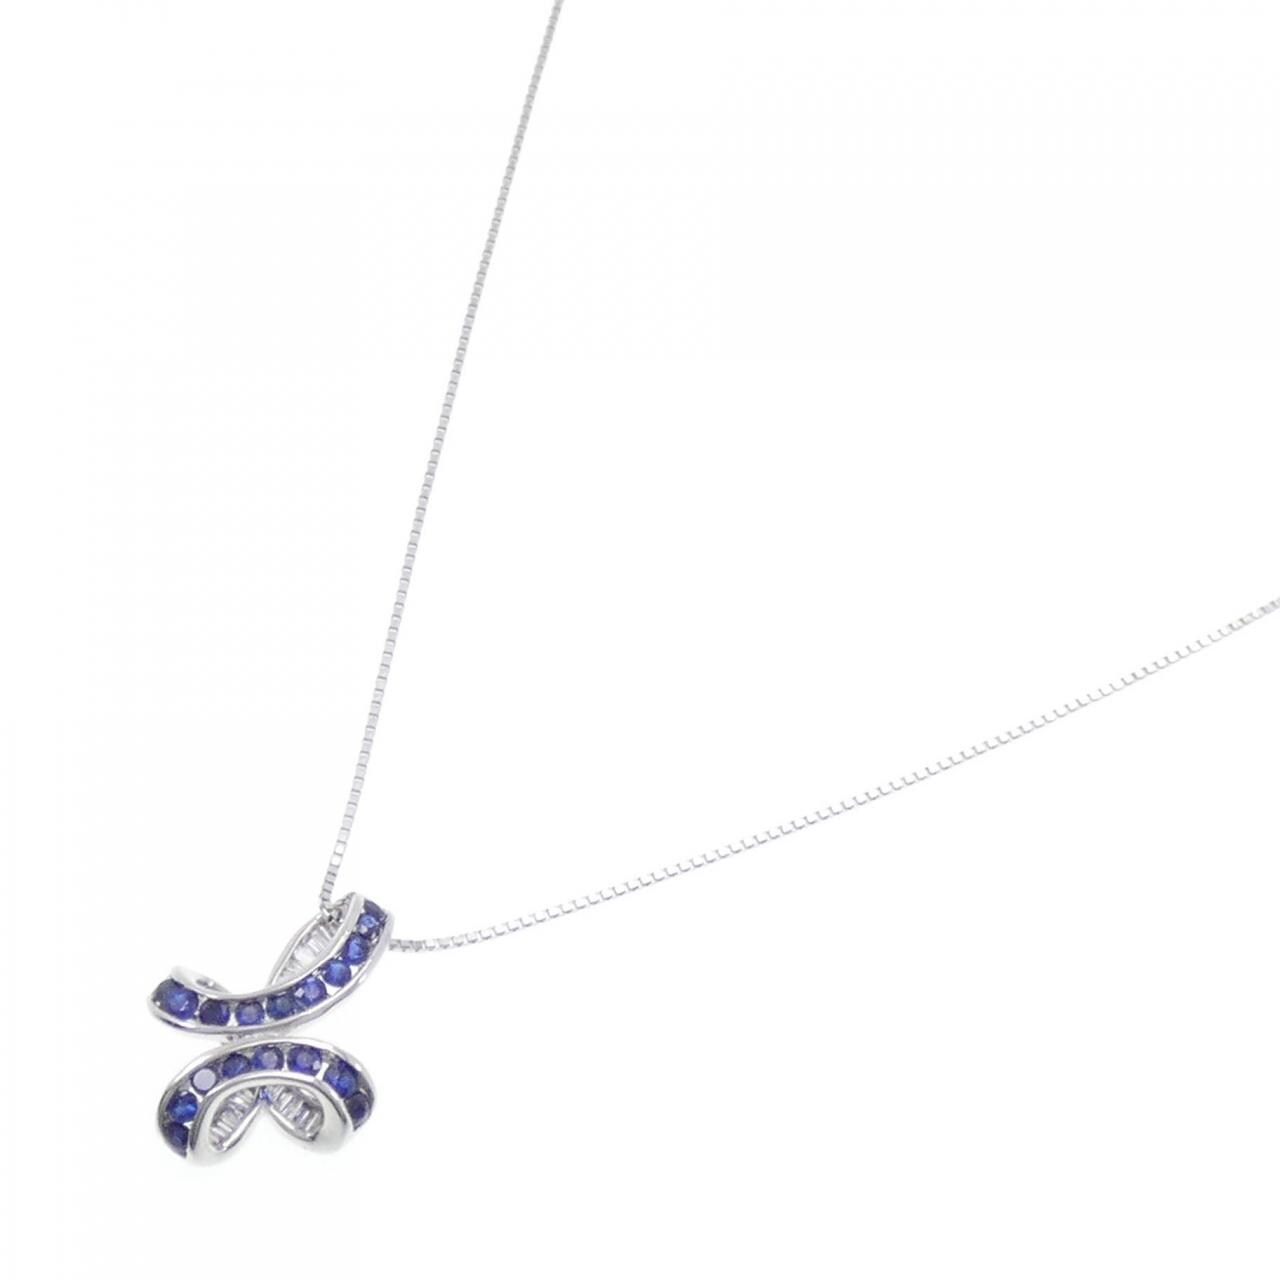 K18WG sapphire necklace 0.43CT